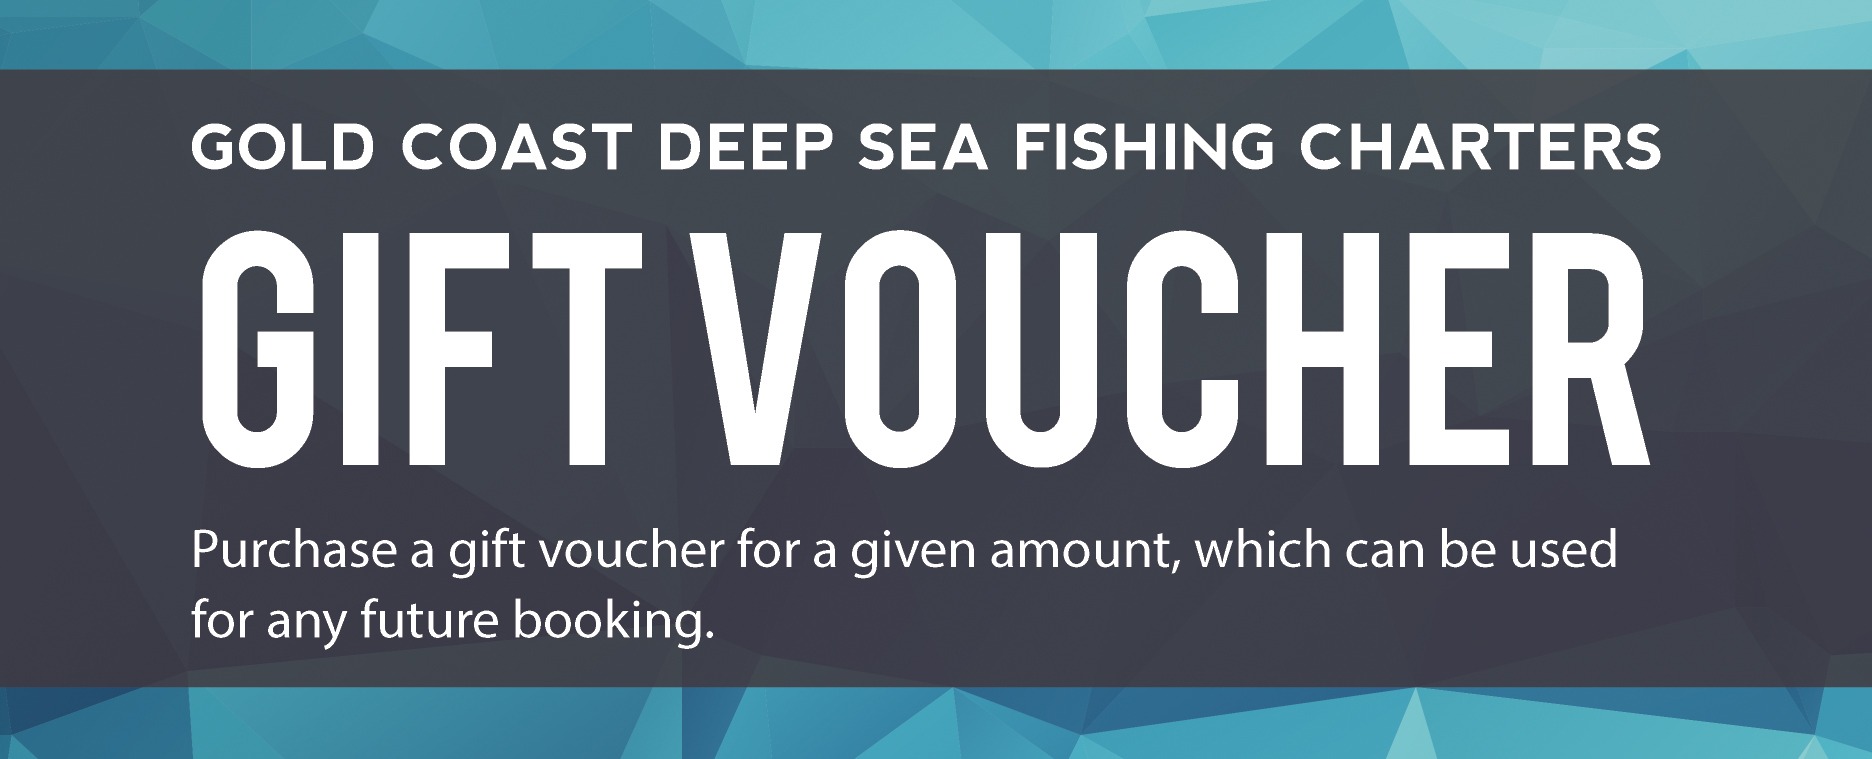 Gold coast fishing charters vouchers